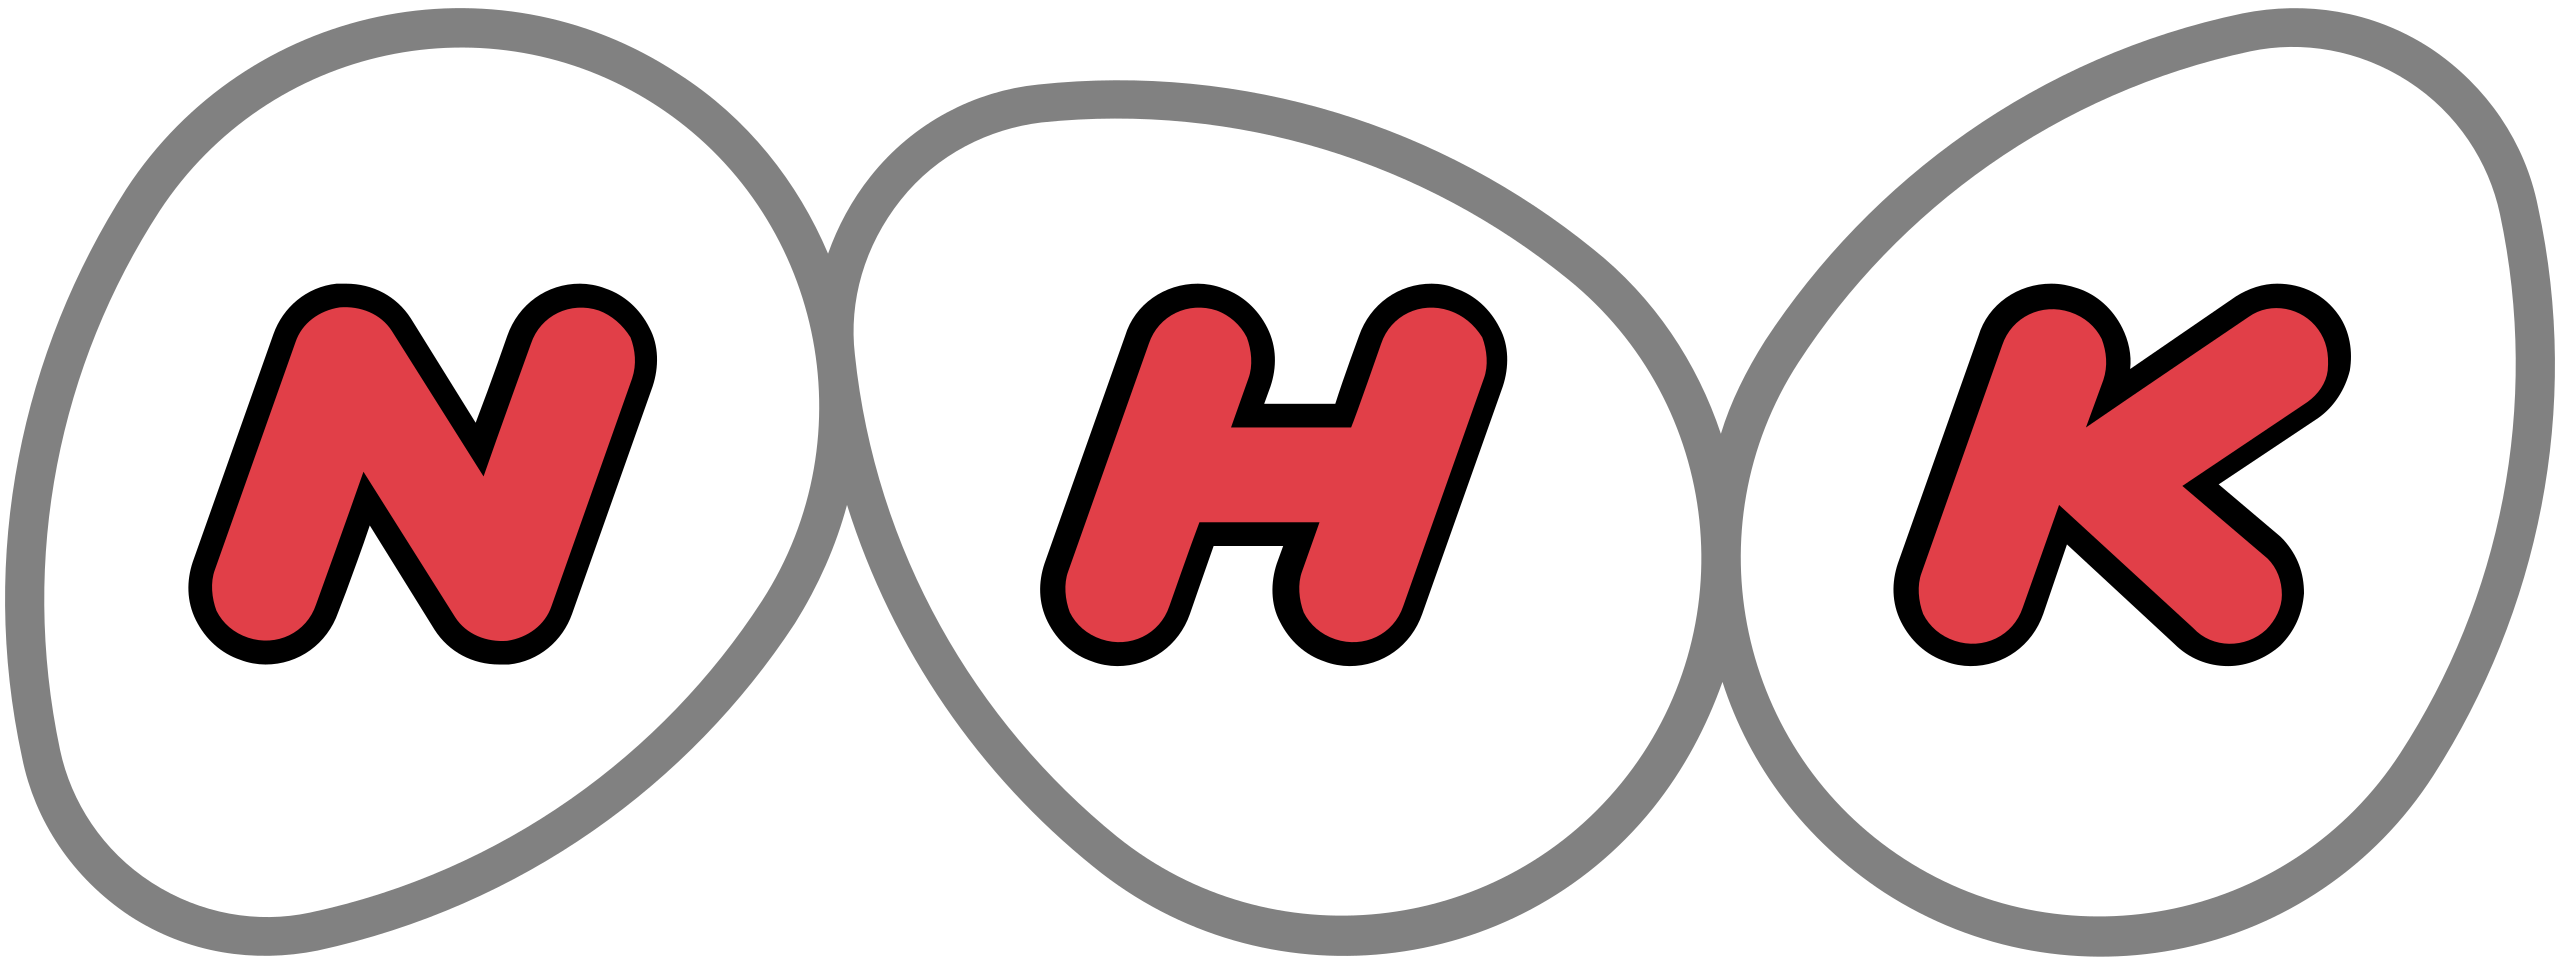 File:NHK logo.svg - Wikimedia Commons